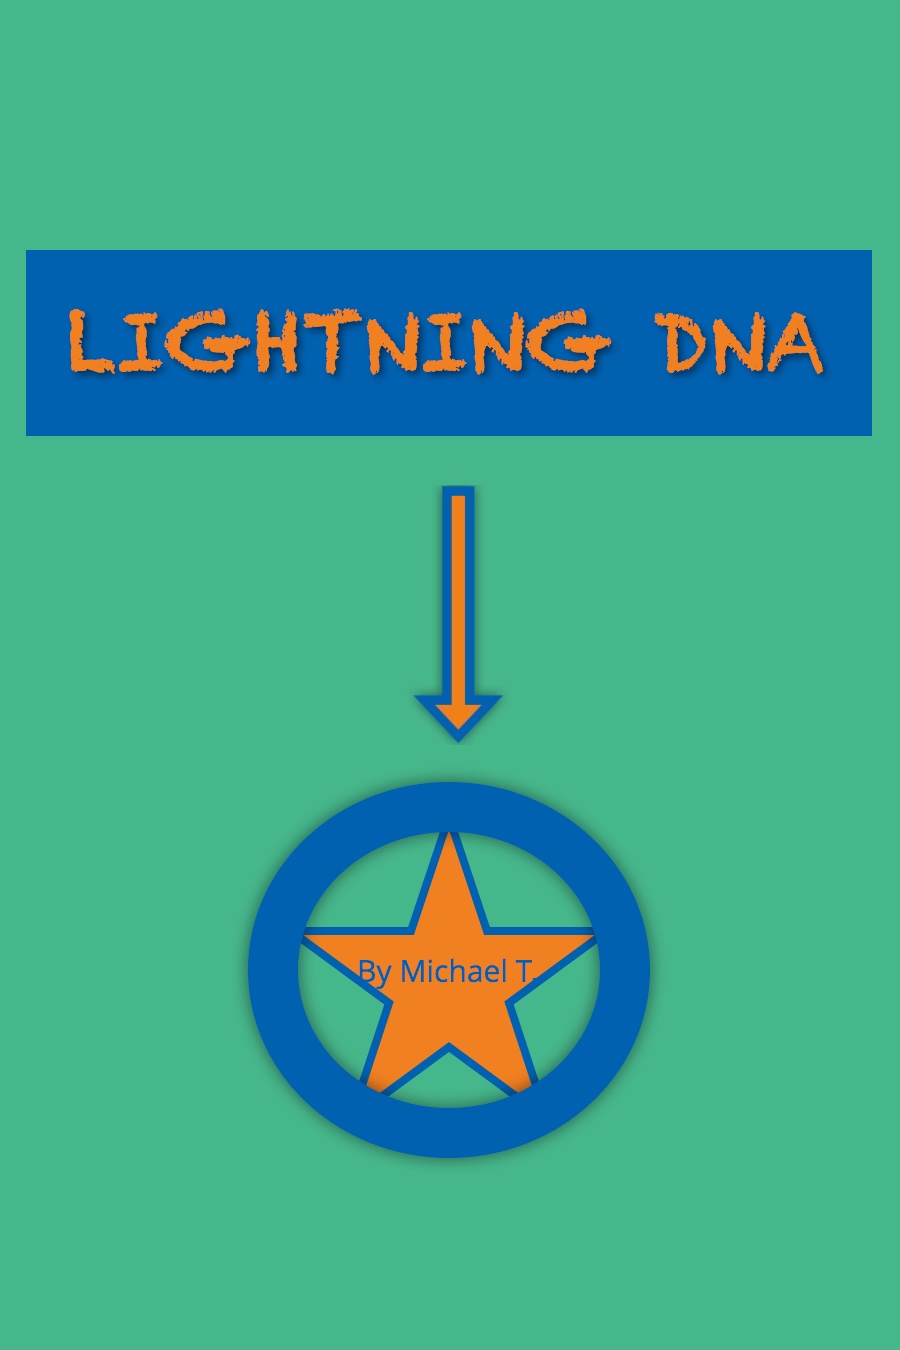 Lightning DNA by Michael T